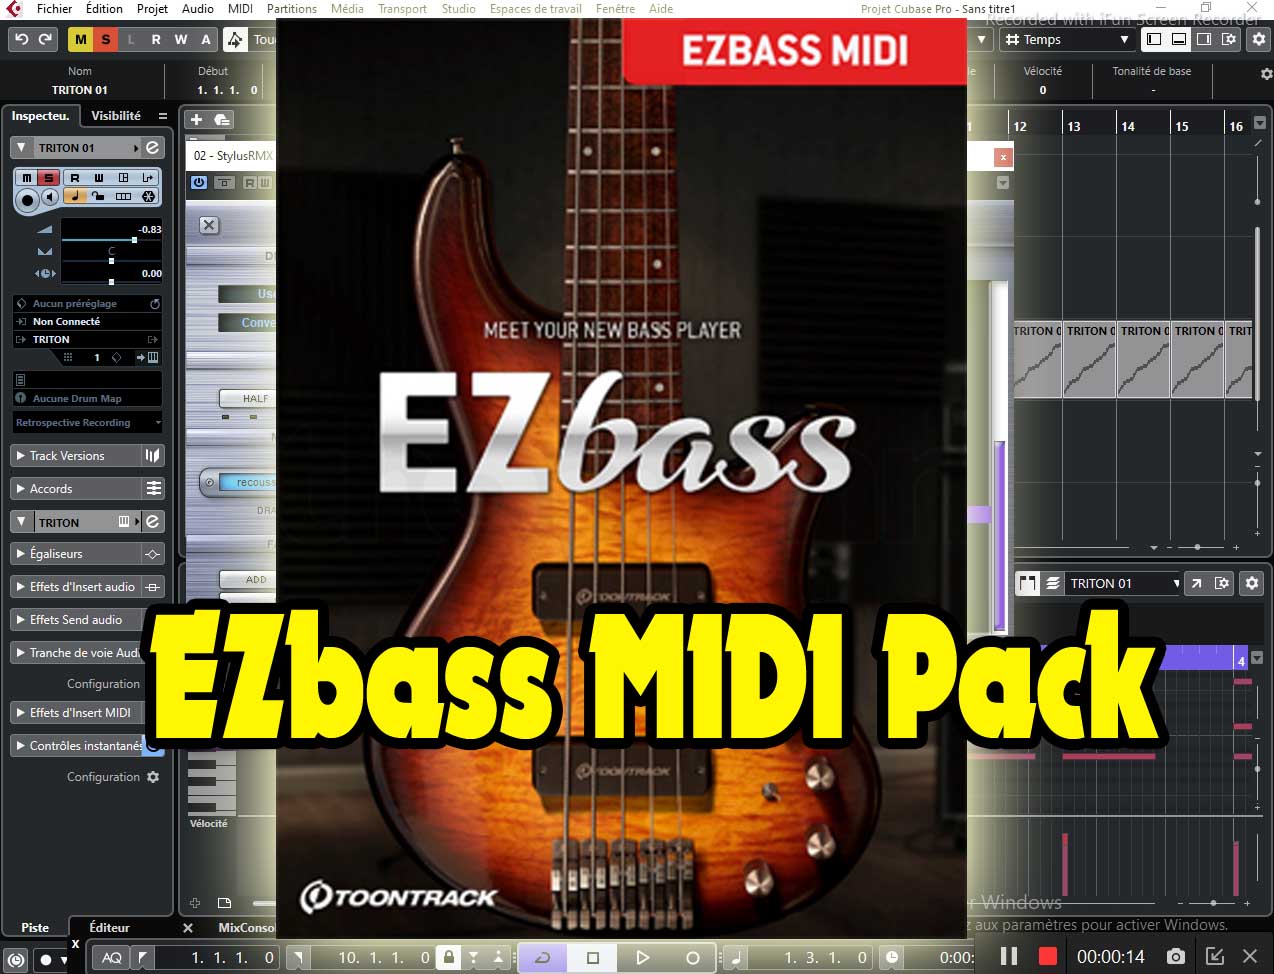 EZbass MIDI Pack